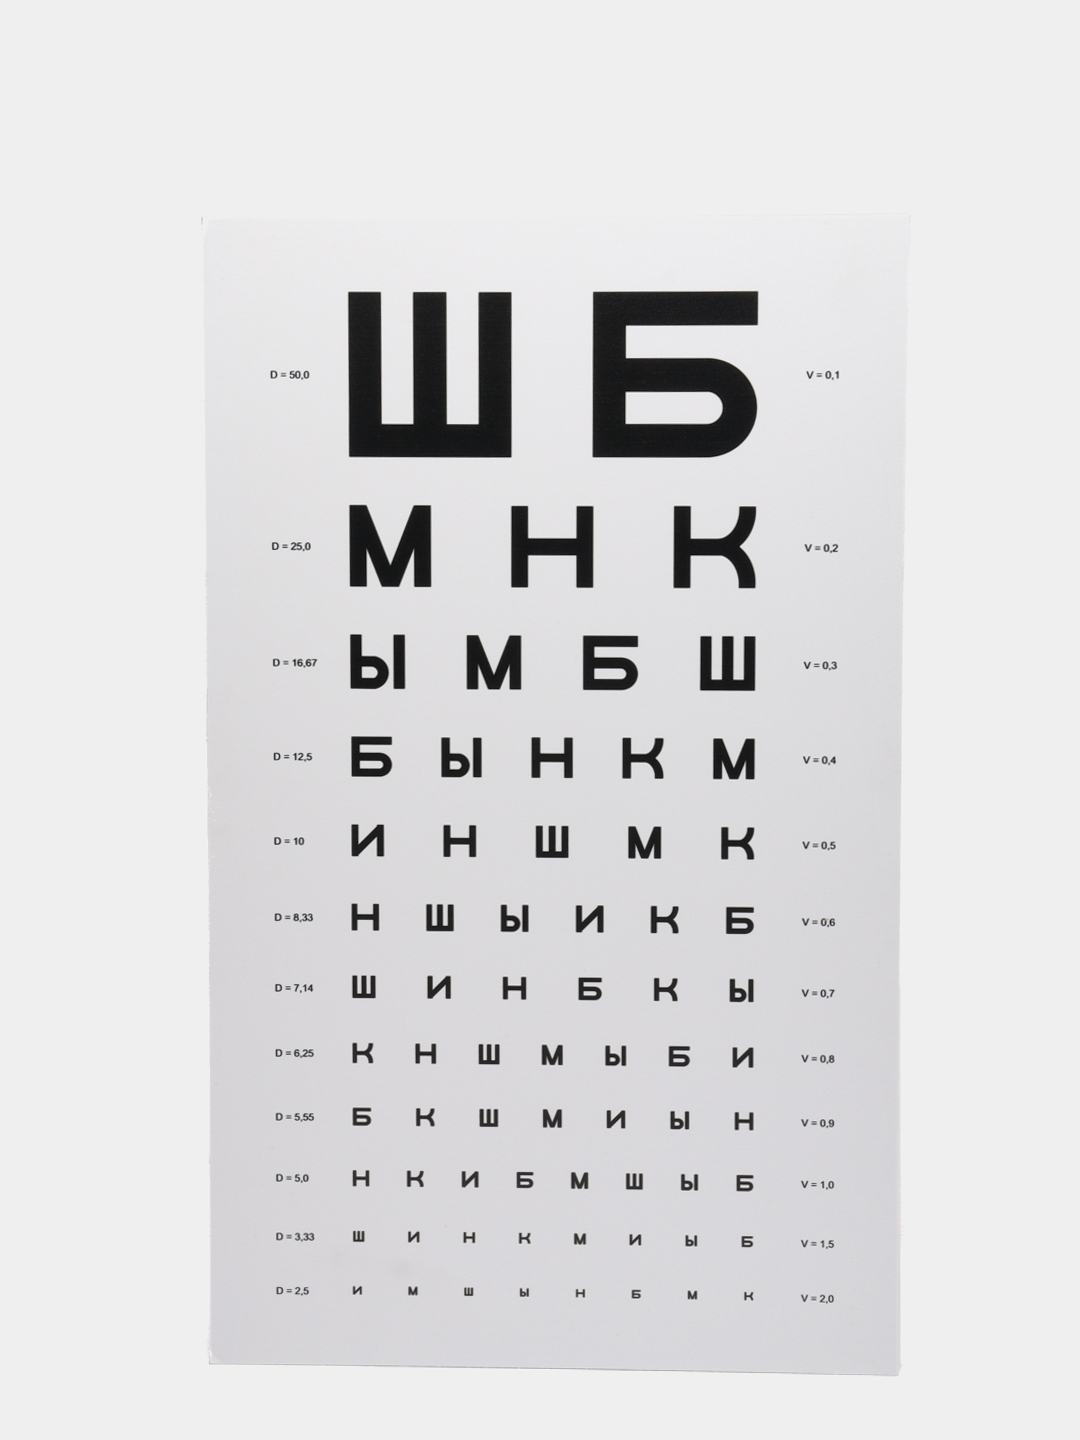 табличка для проверки зрения у окулиста фото